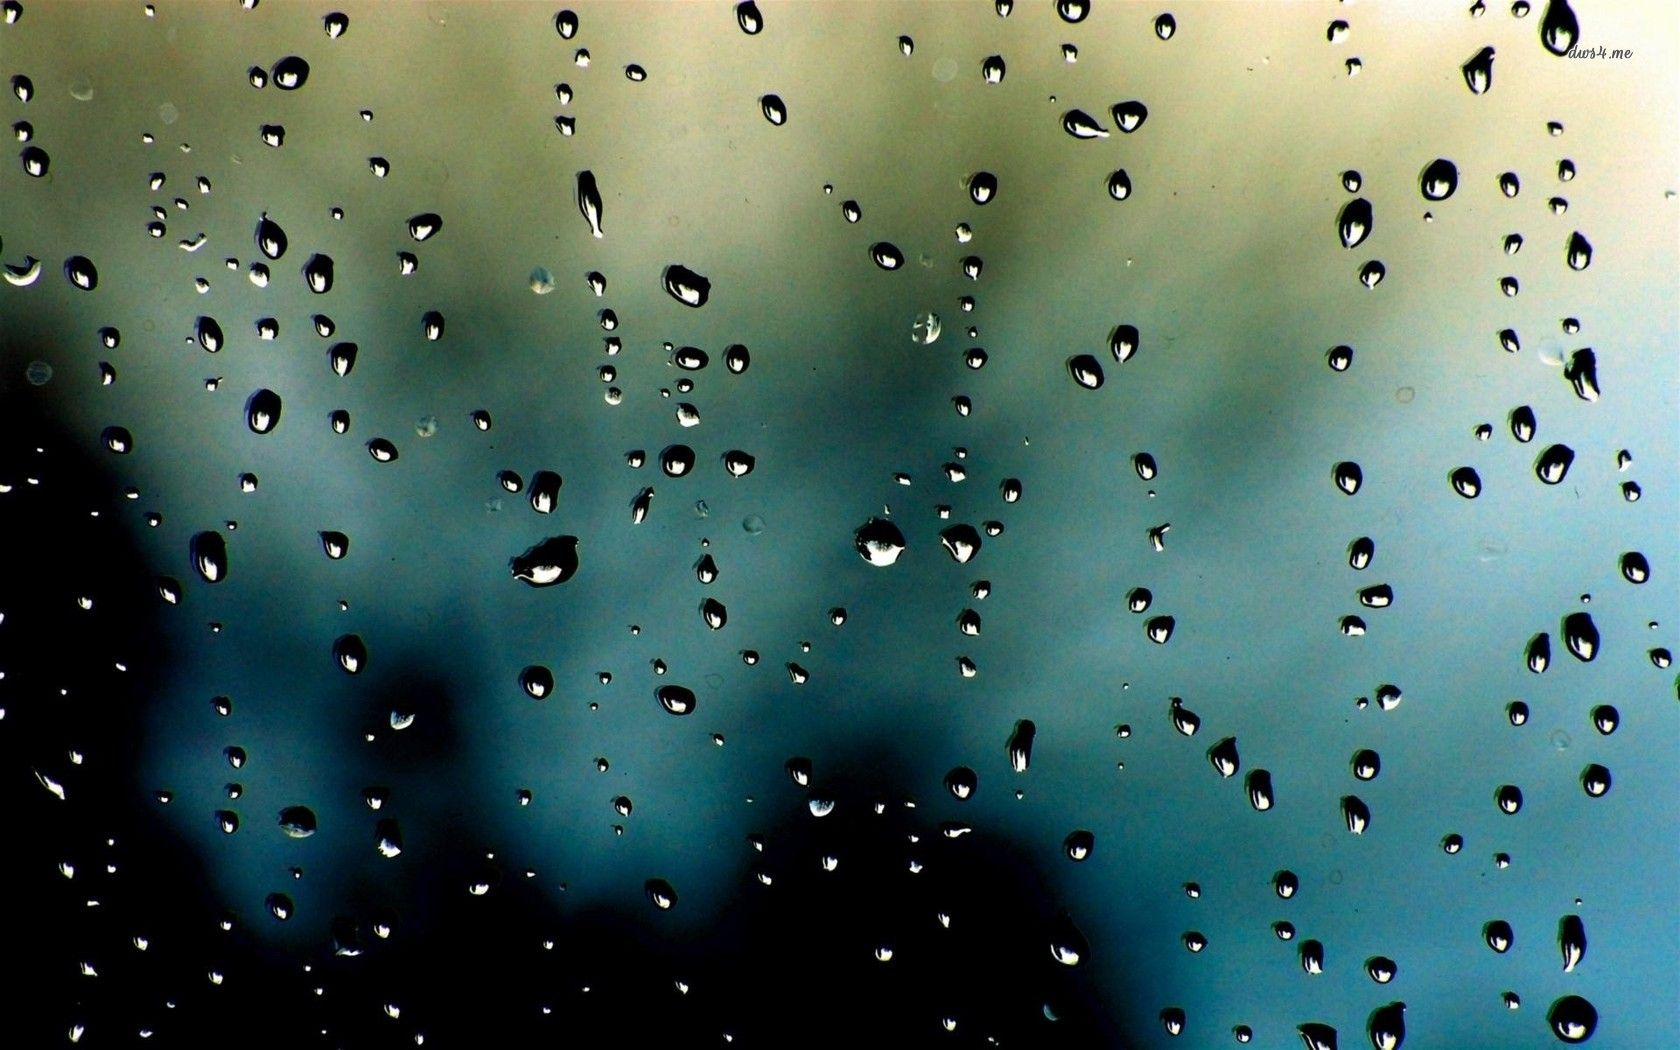 rain drops live wallpapers hd,blue,water,green,drop,drizzle